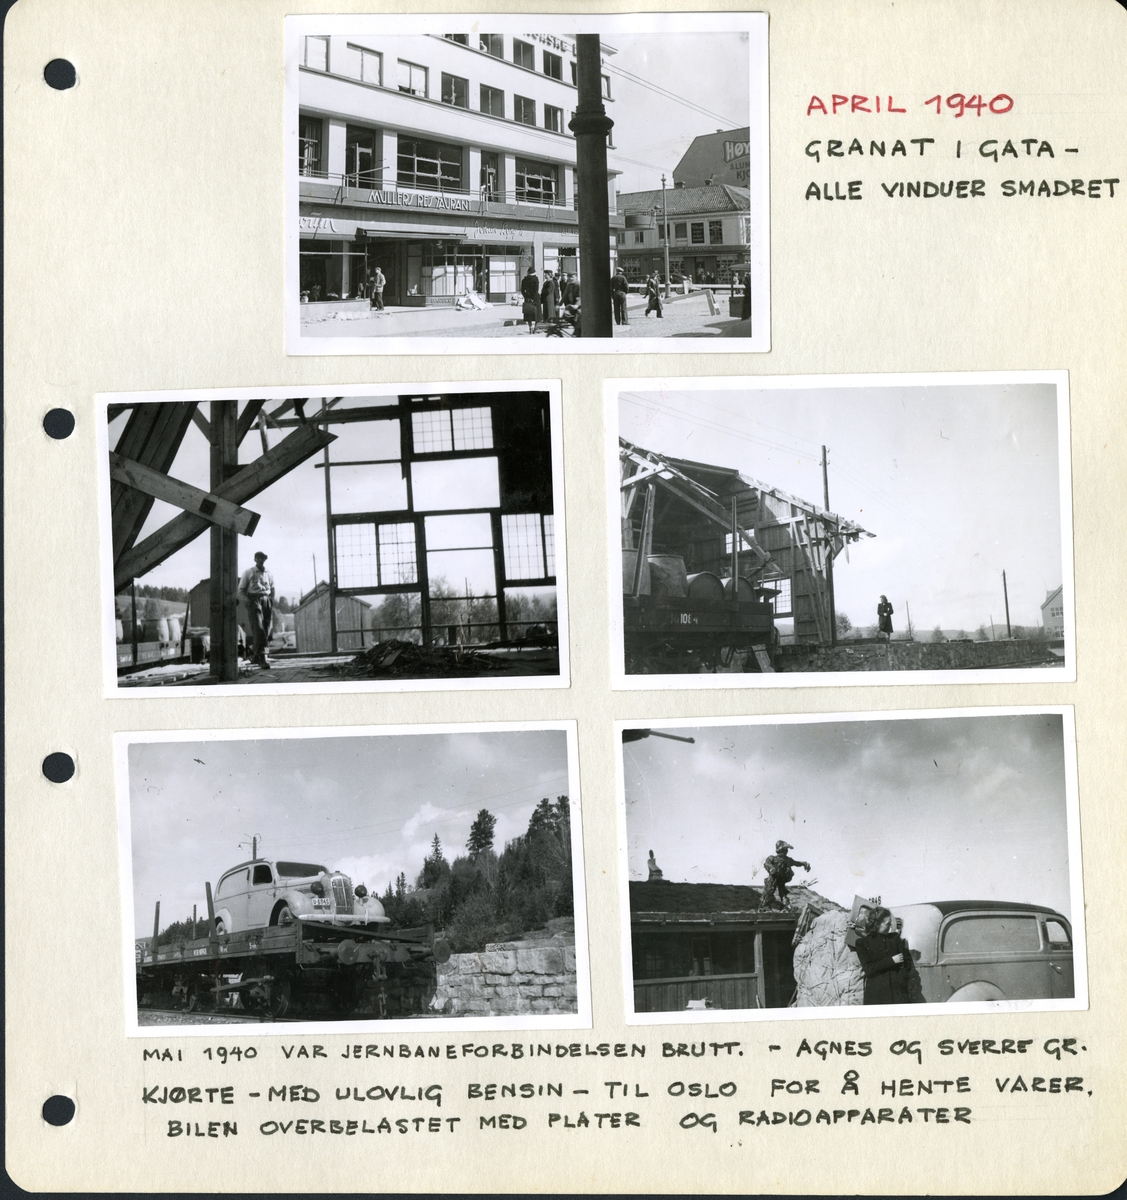 Fra familiealbum. Under fotografiet står det: "Fra april 1940. Granat i gata- alle vinduer smadret."